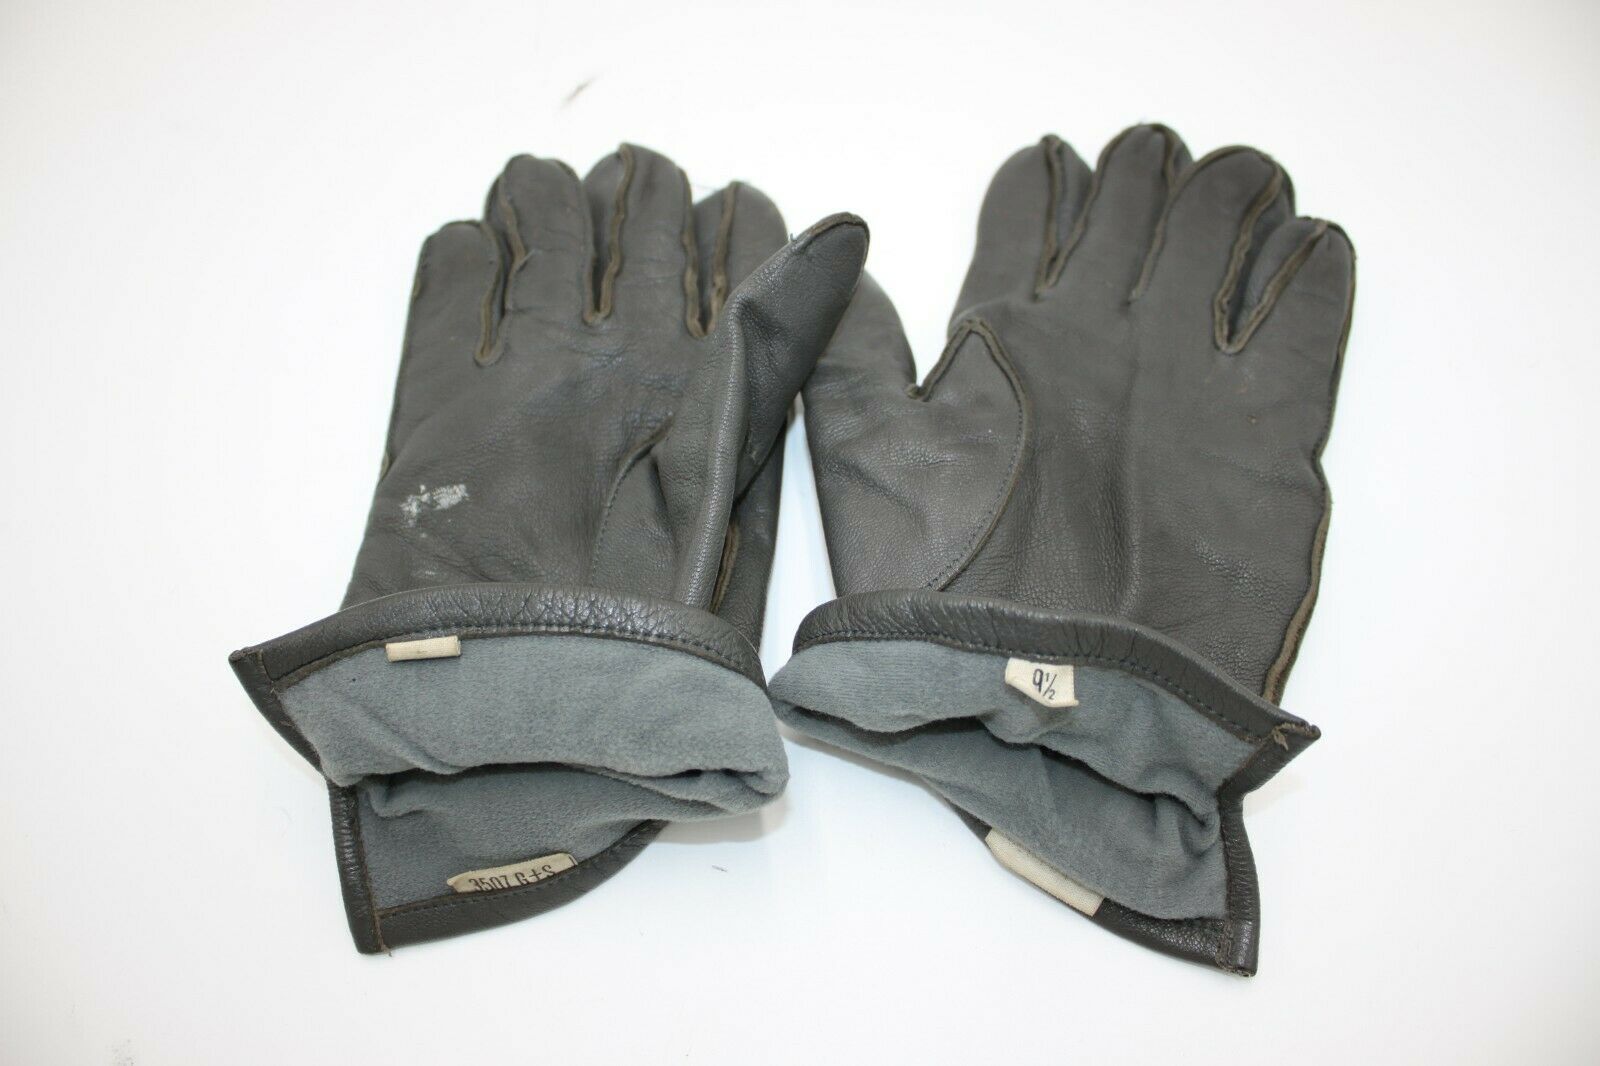 Army Light Duty Leather Work Glove- Black - Medium